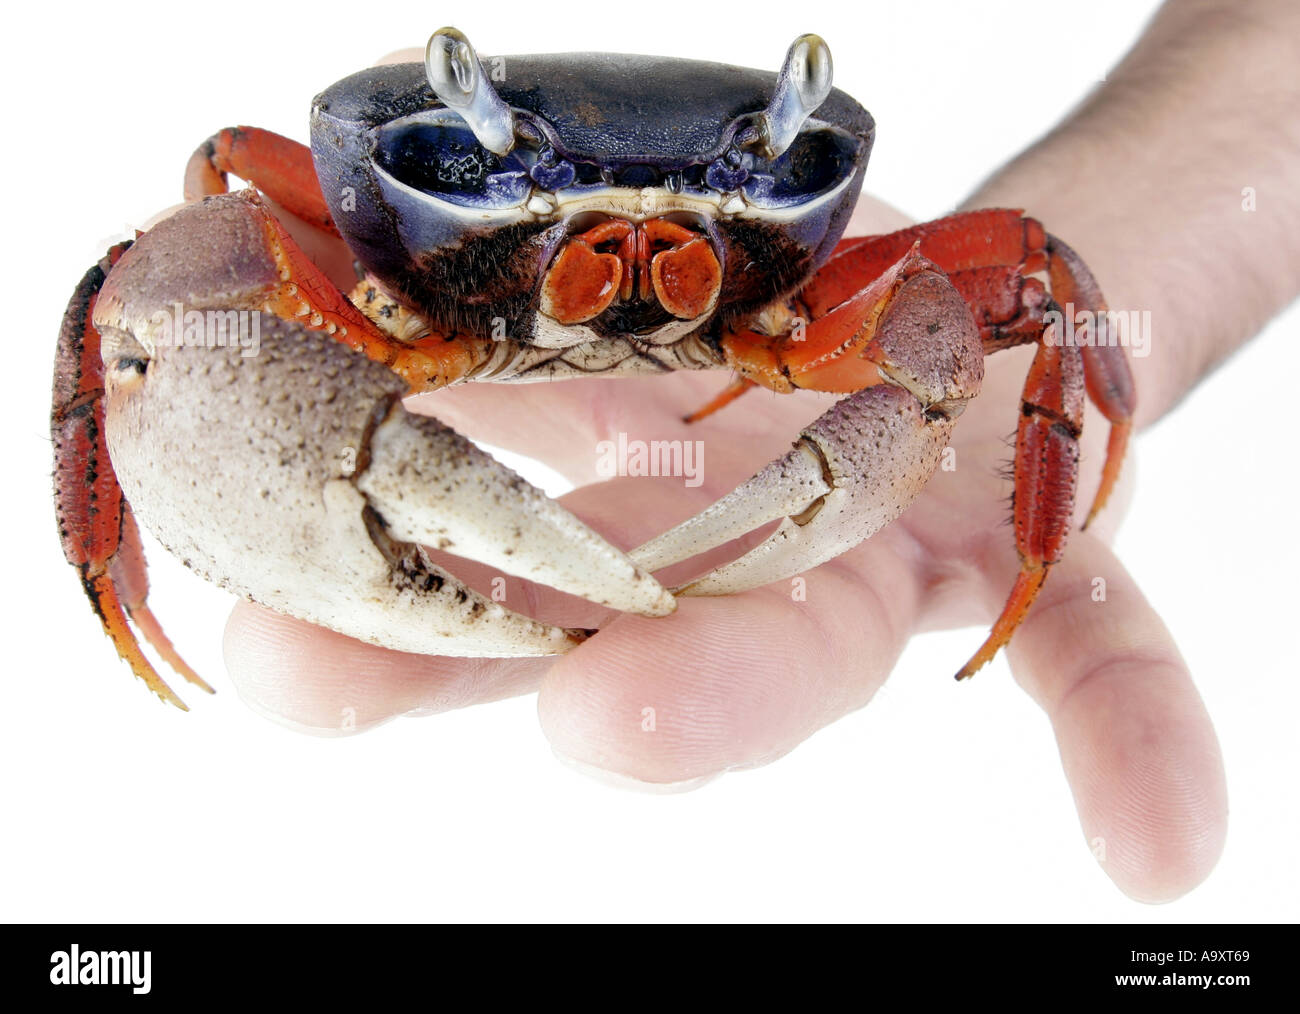 rainbow crab, West African rainbow crab (Cardisoma armatum), in hand. Stock Photo